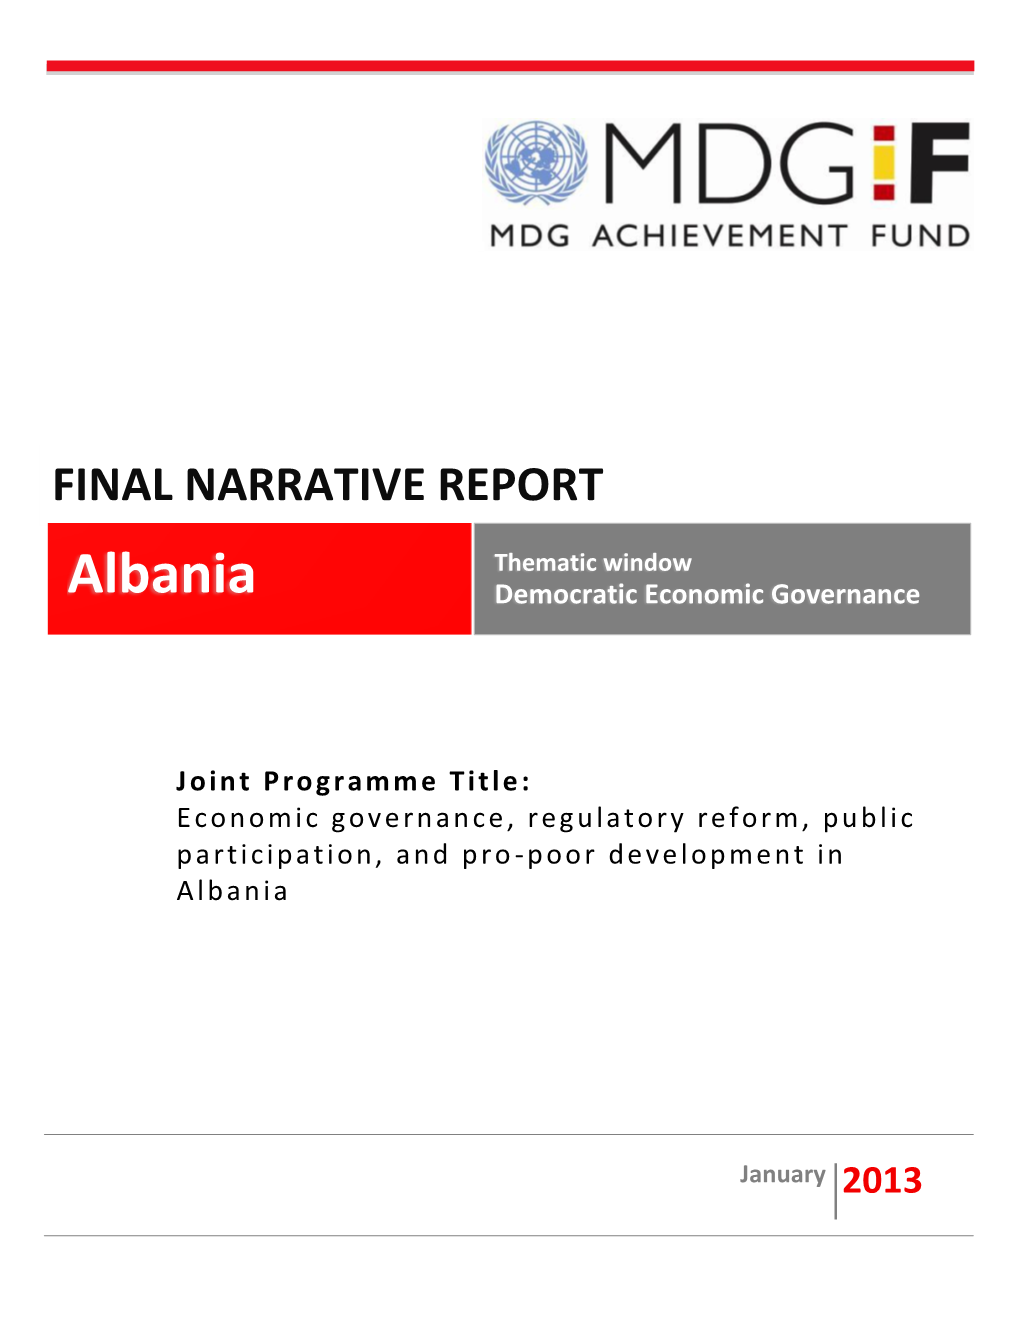 Albania Democratic Economic Governance